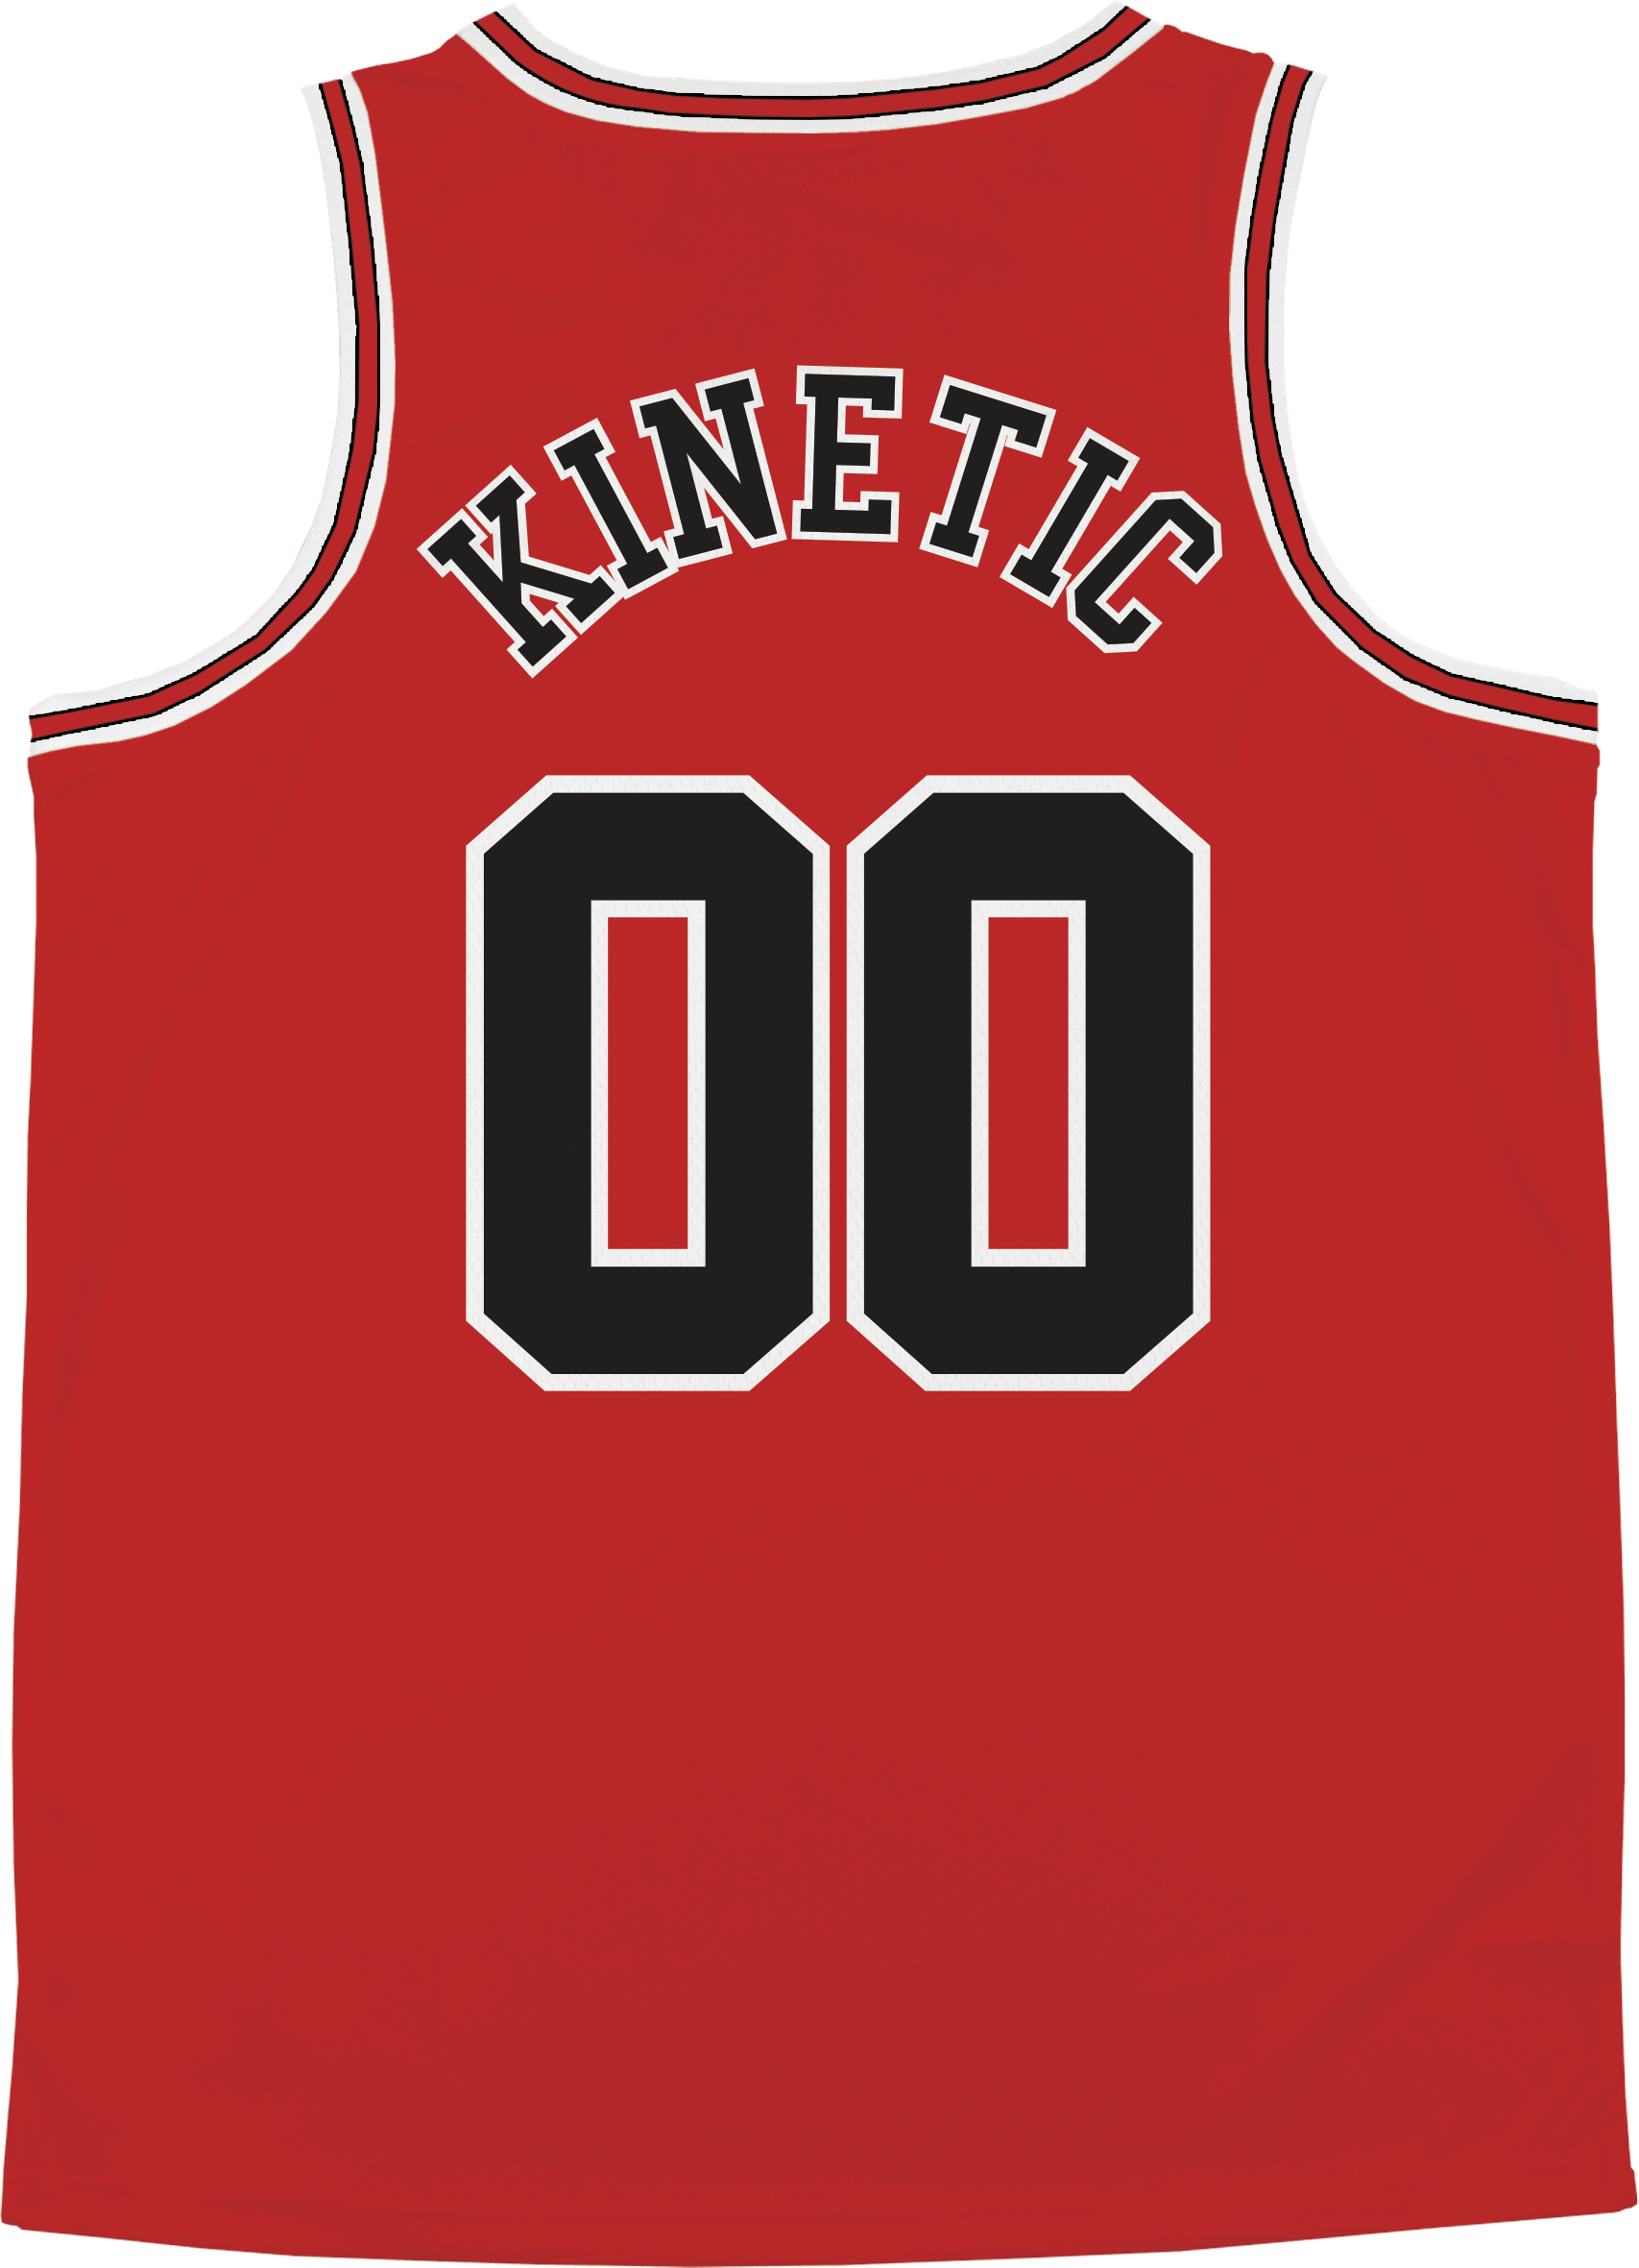 Phi Gamma Delta - Big Red Basketball Jersey - Kinetic Society